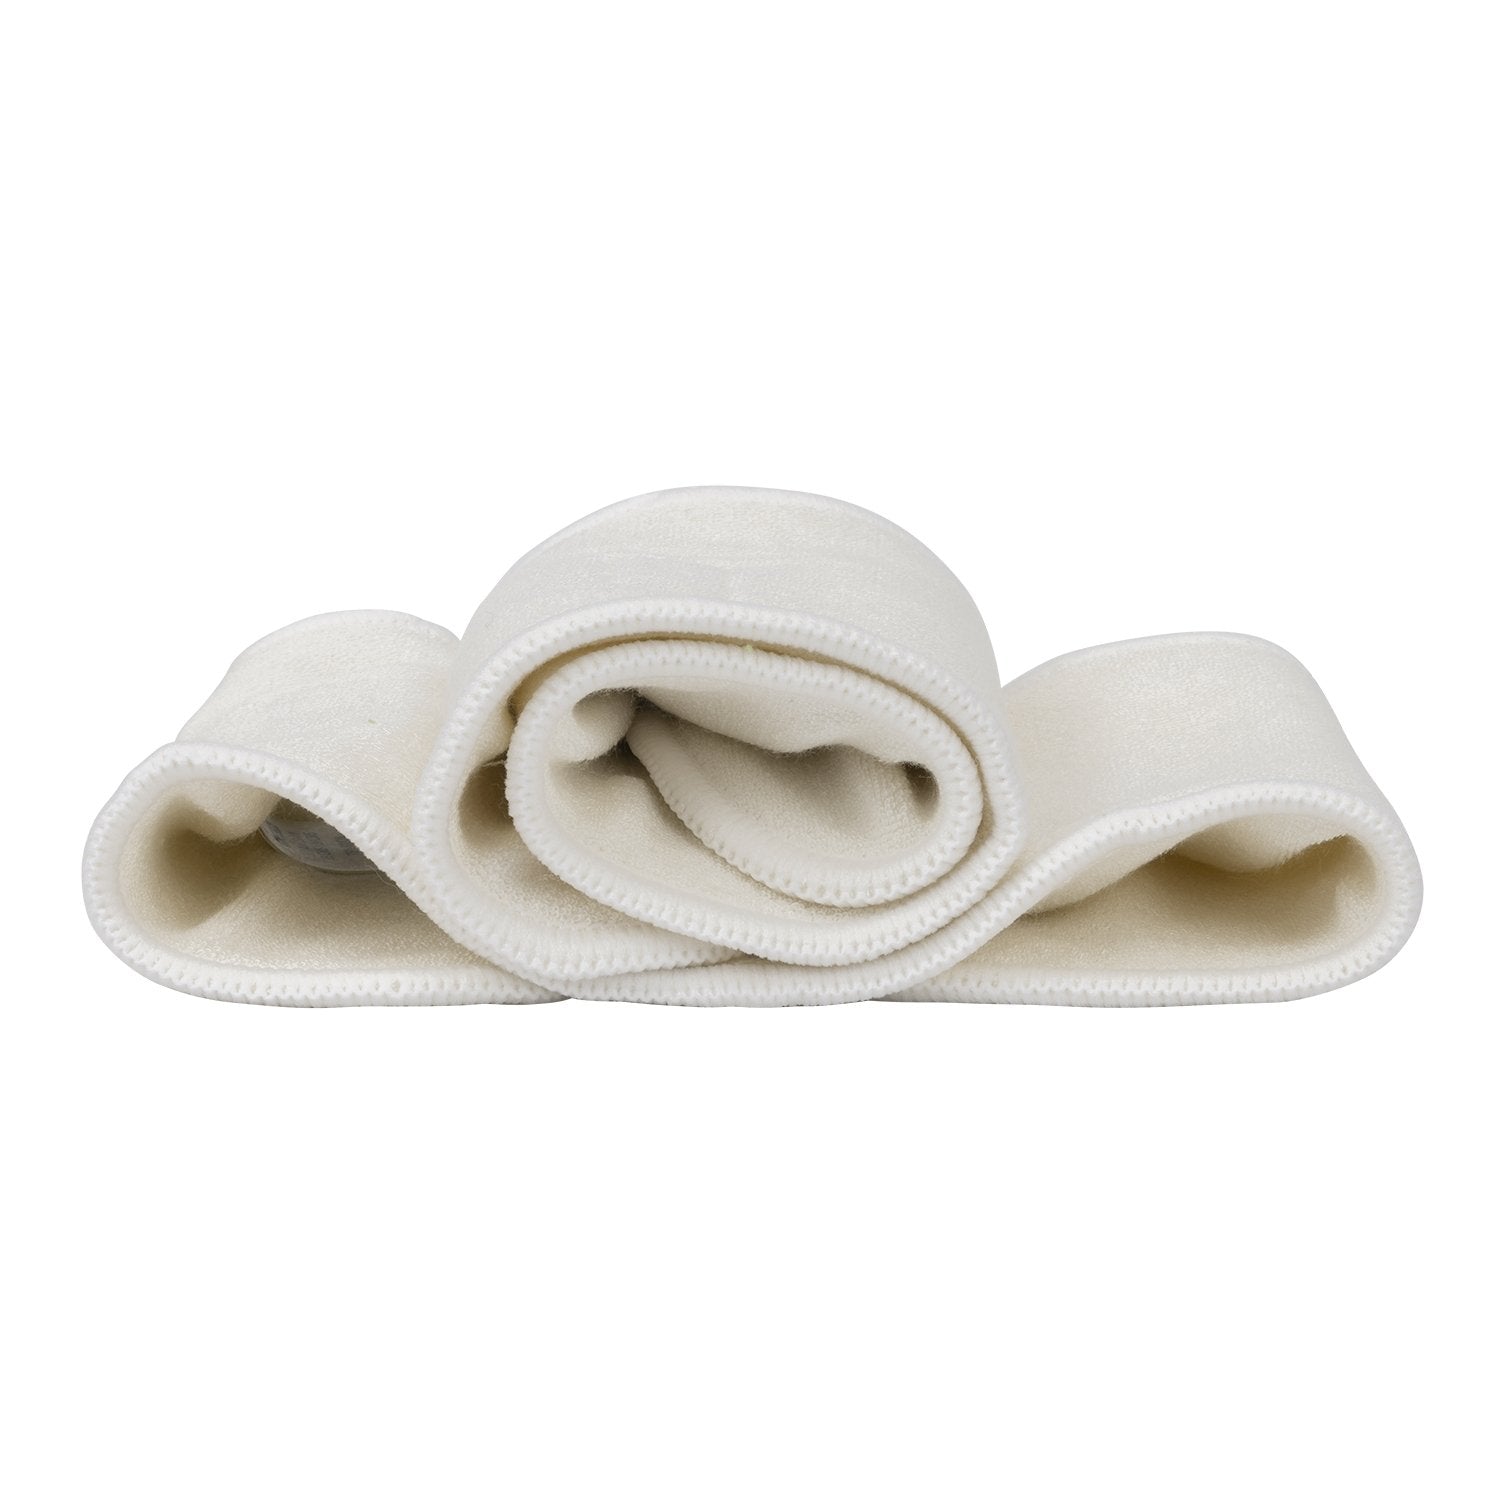 Reusable Cloth Diaper Inserts - 2 Pack - natural - Koko-Kamel.com